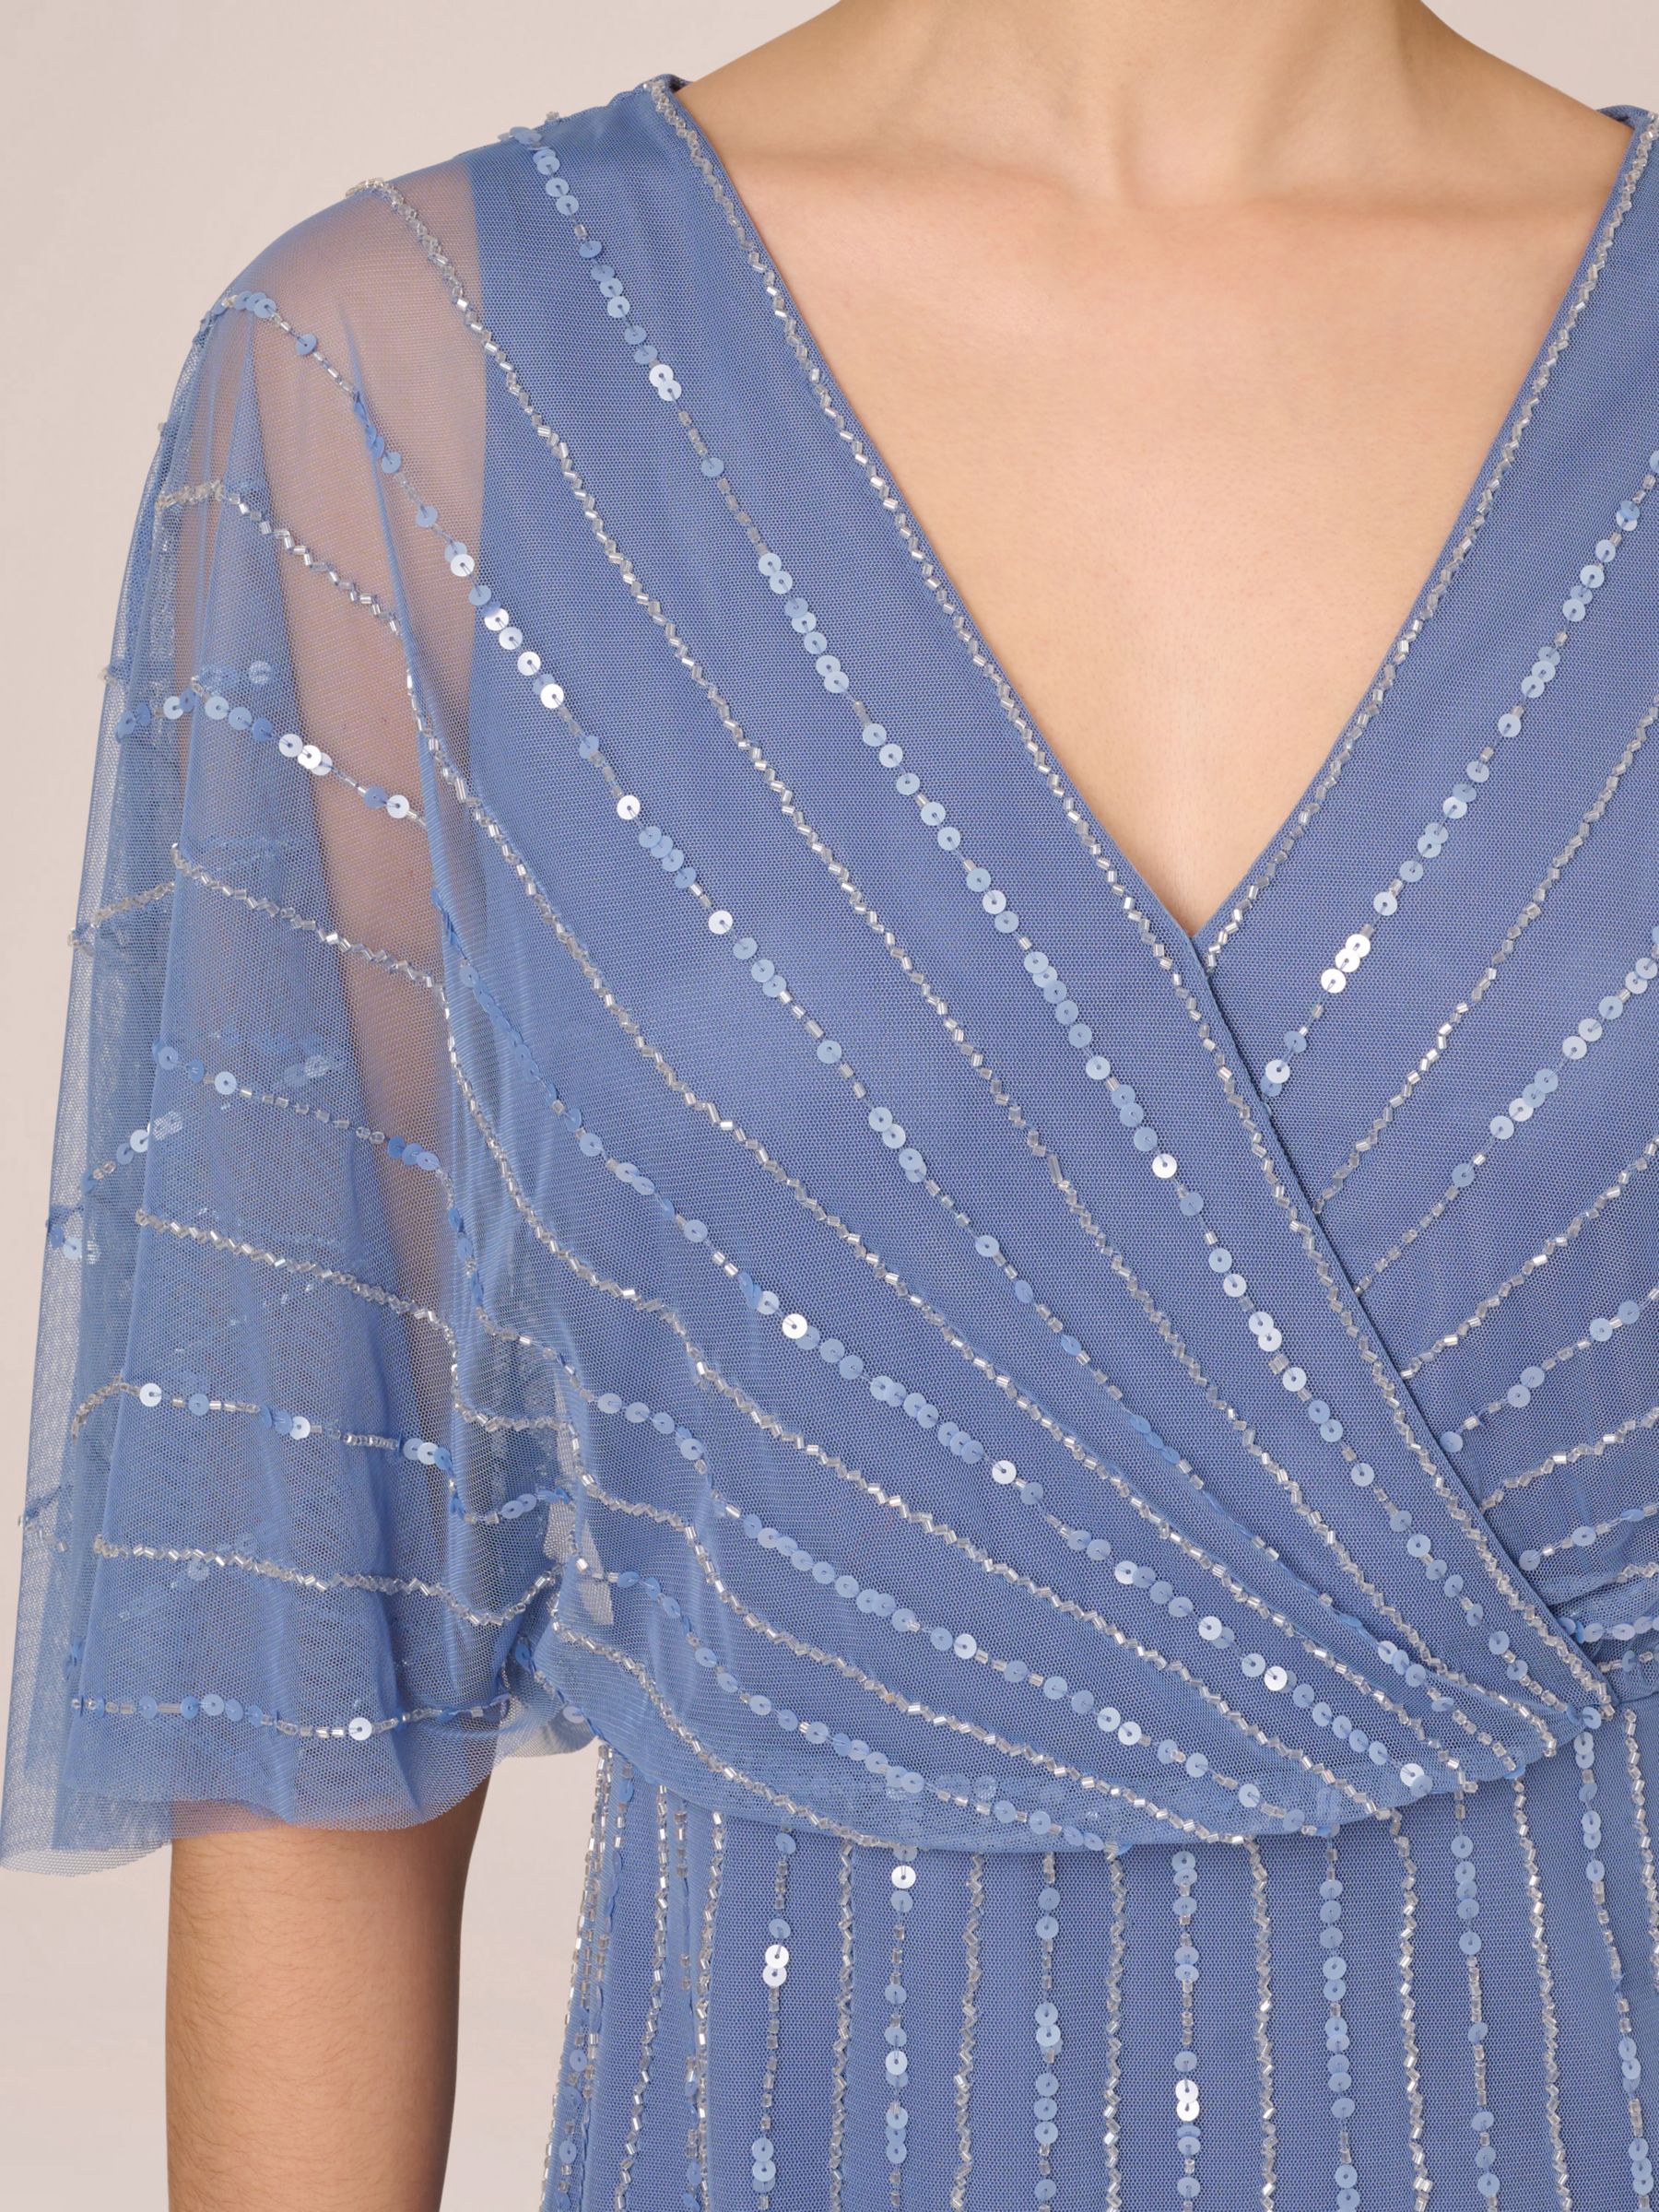 Papell Studio Beaded Mini Dress, French Blue, 6